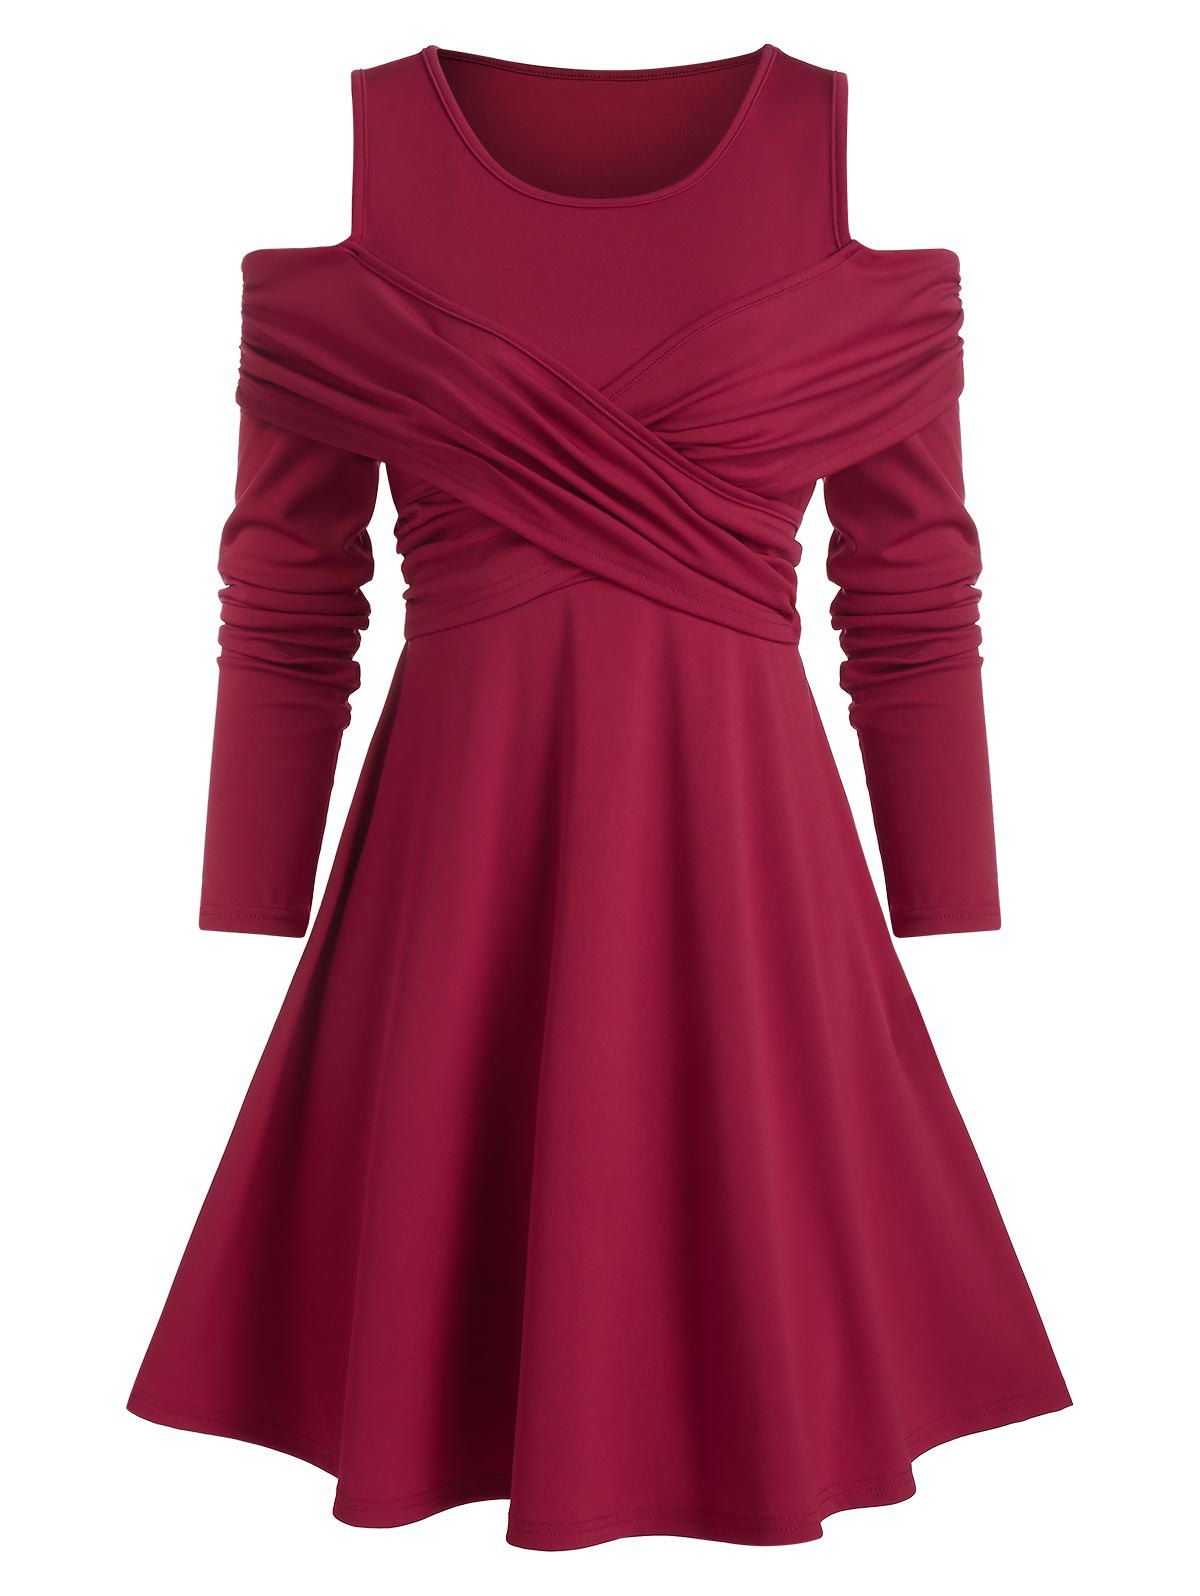 Crisscross Cold Shoulder Mini Long Sleeve Dress - RED 3XL